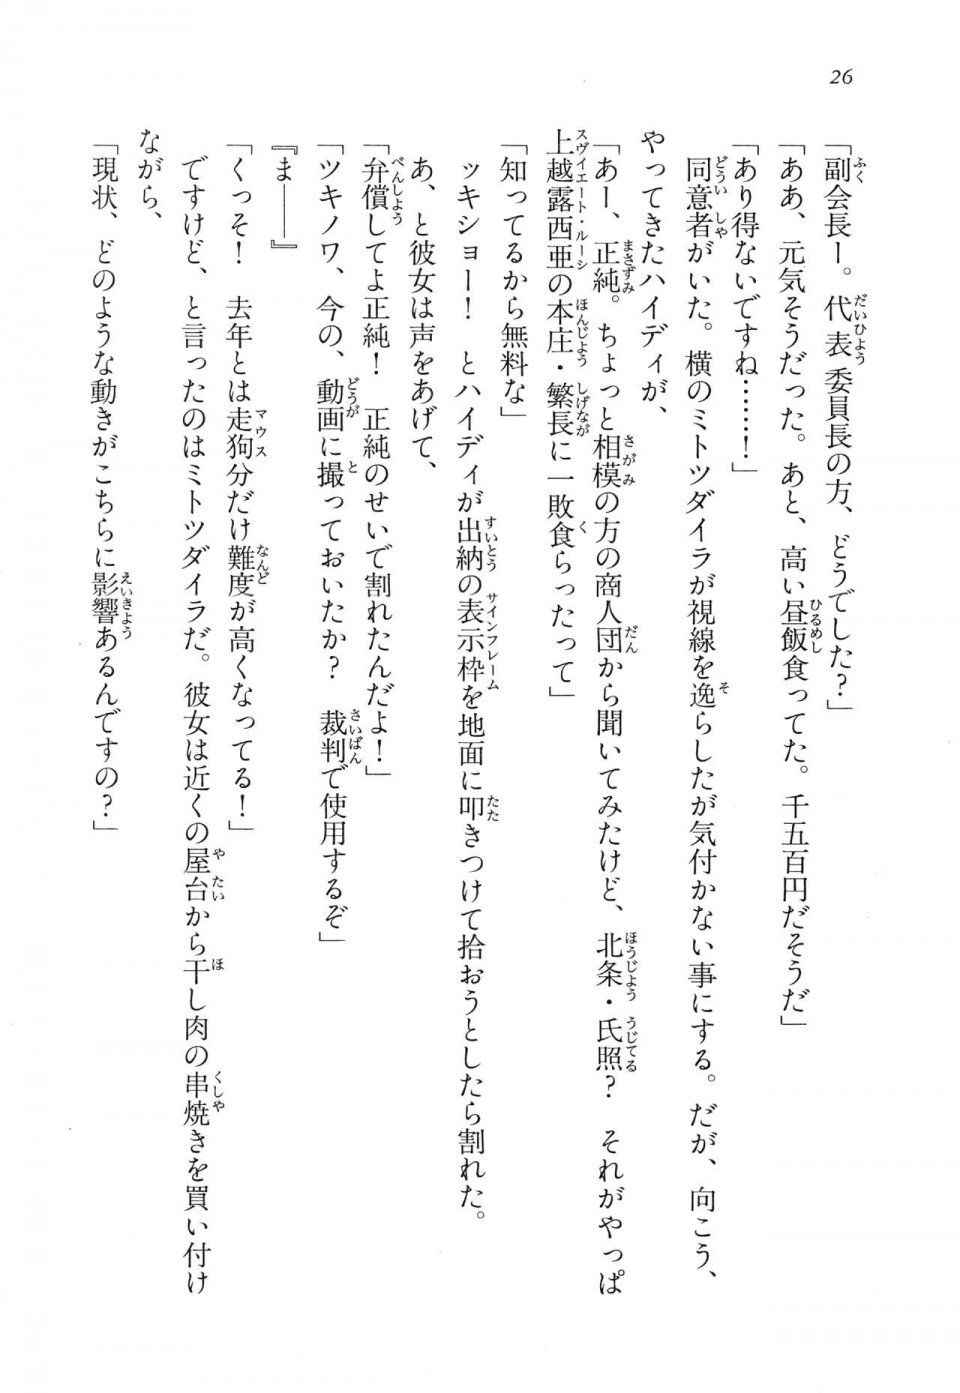 Kyoukai Senjou no Horizon LN Vol 15(6C) Part 1 - Photo #26